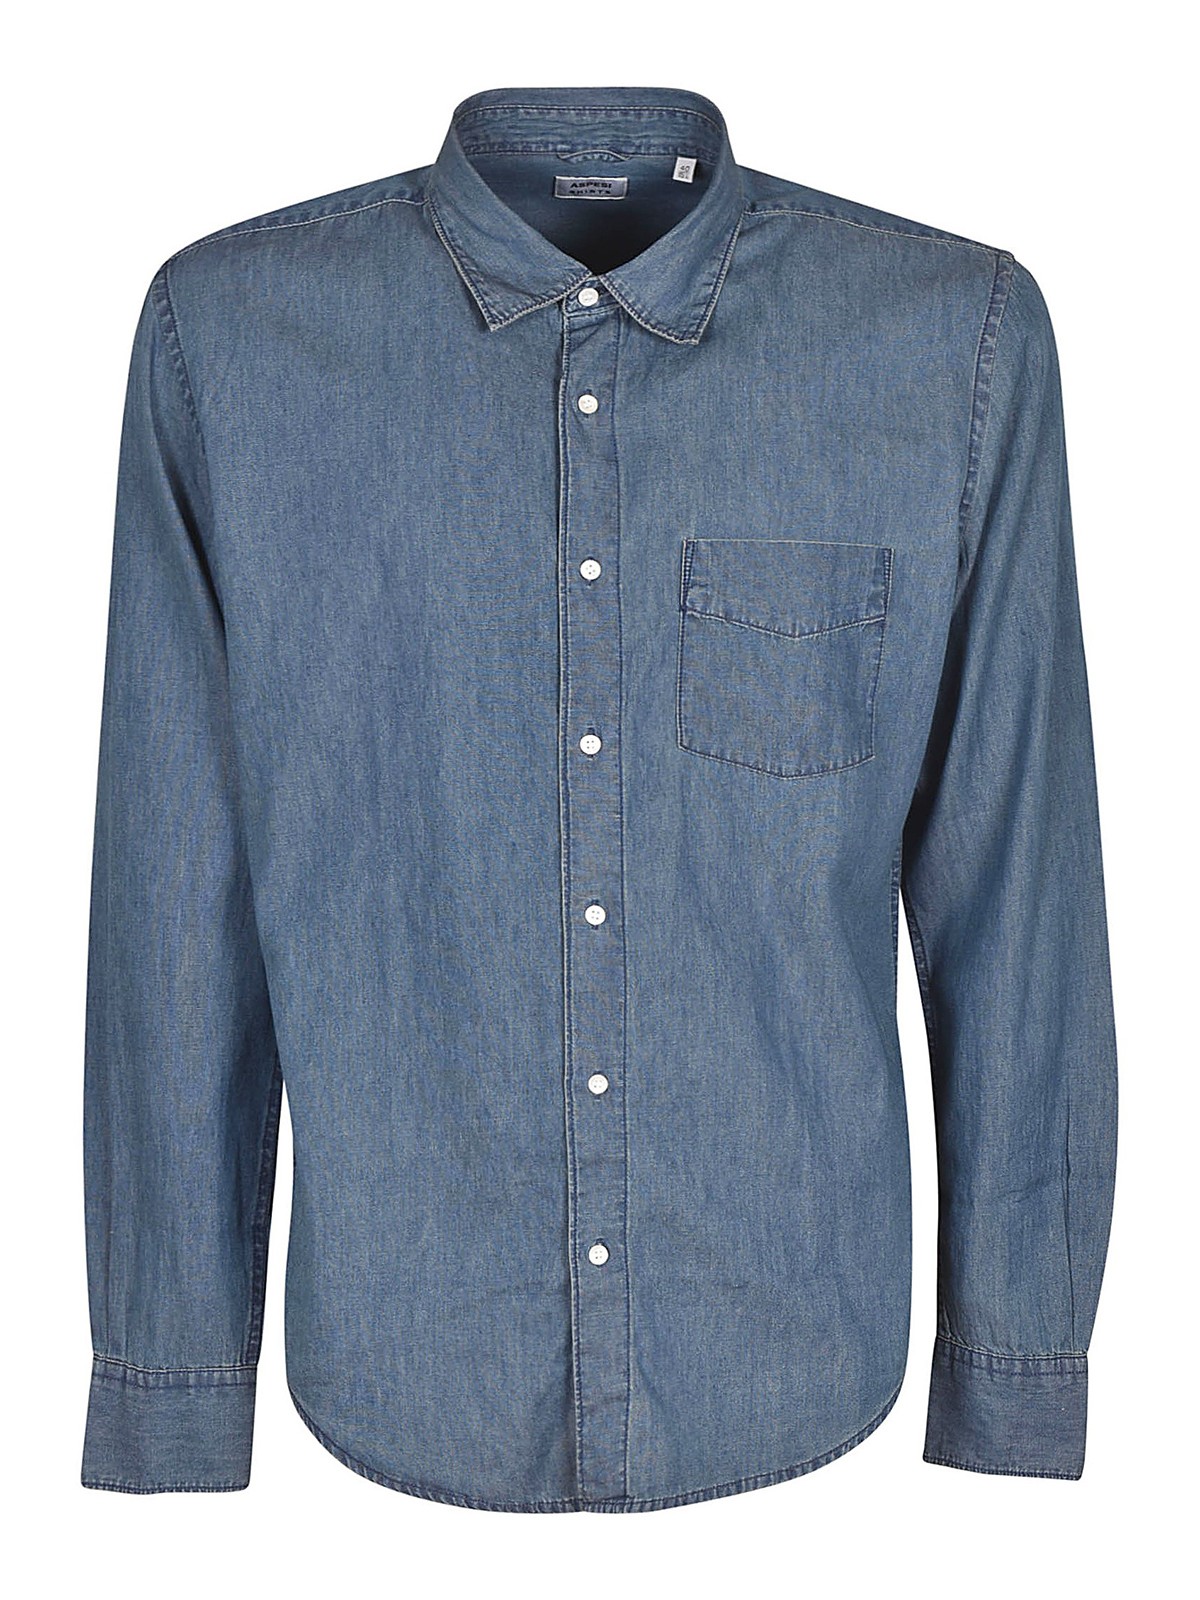 Shirts Aspesi - Sterling shirt - CE95M12401098 | Shop online at iKRIX